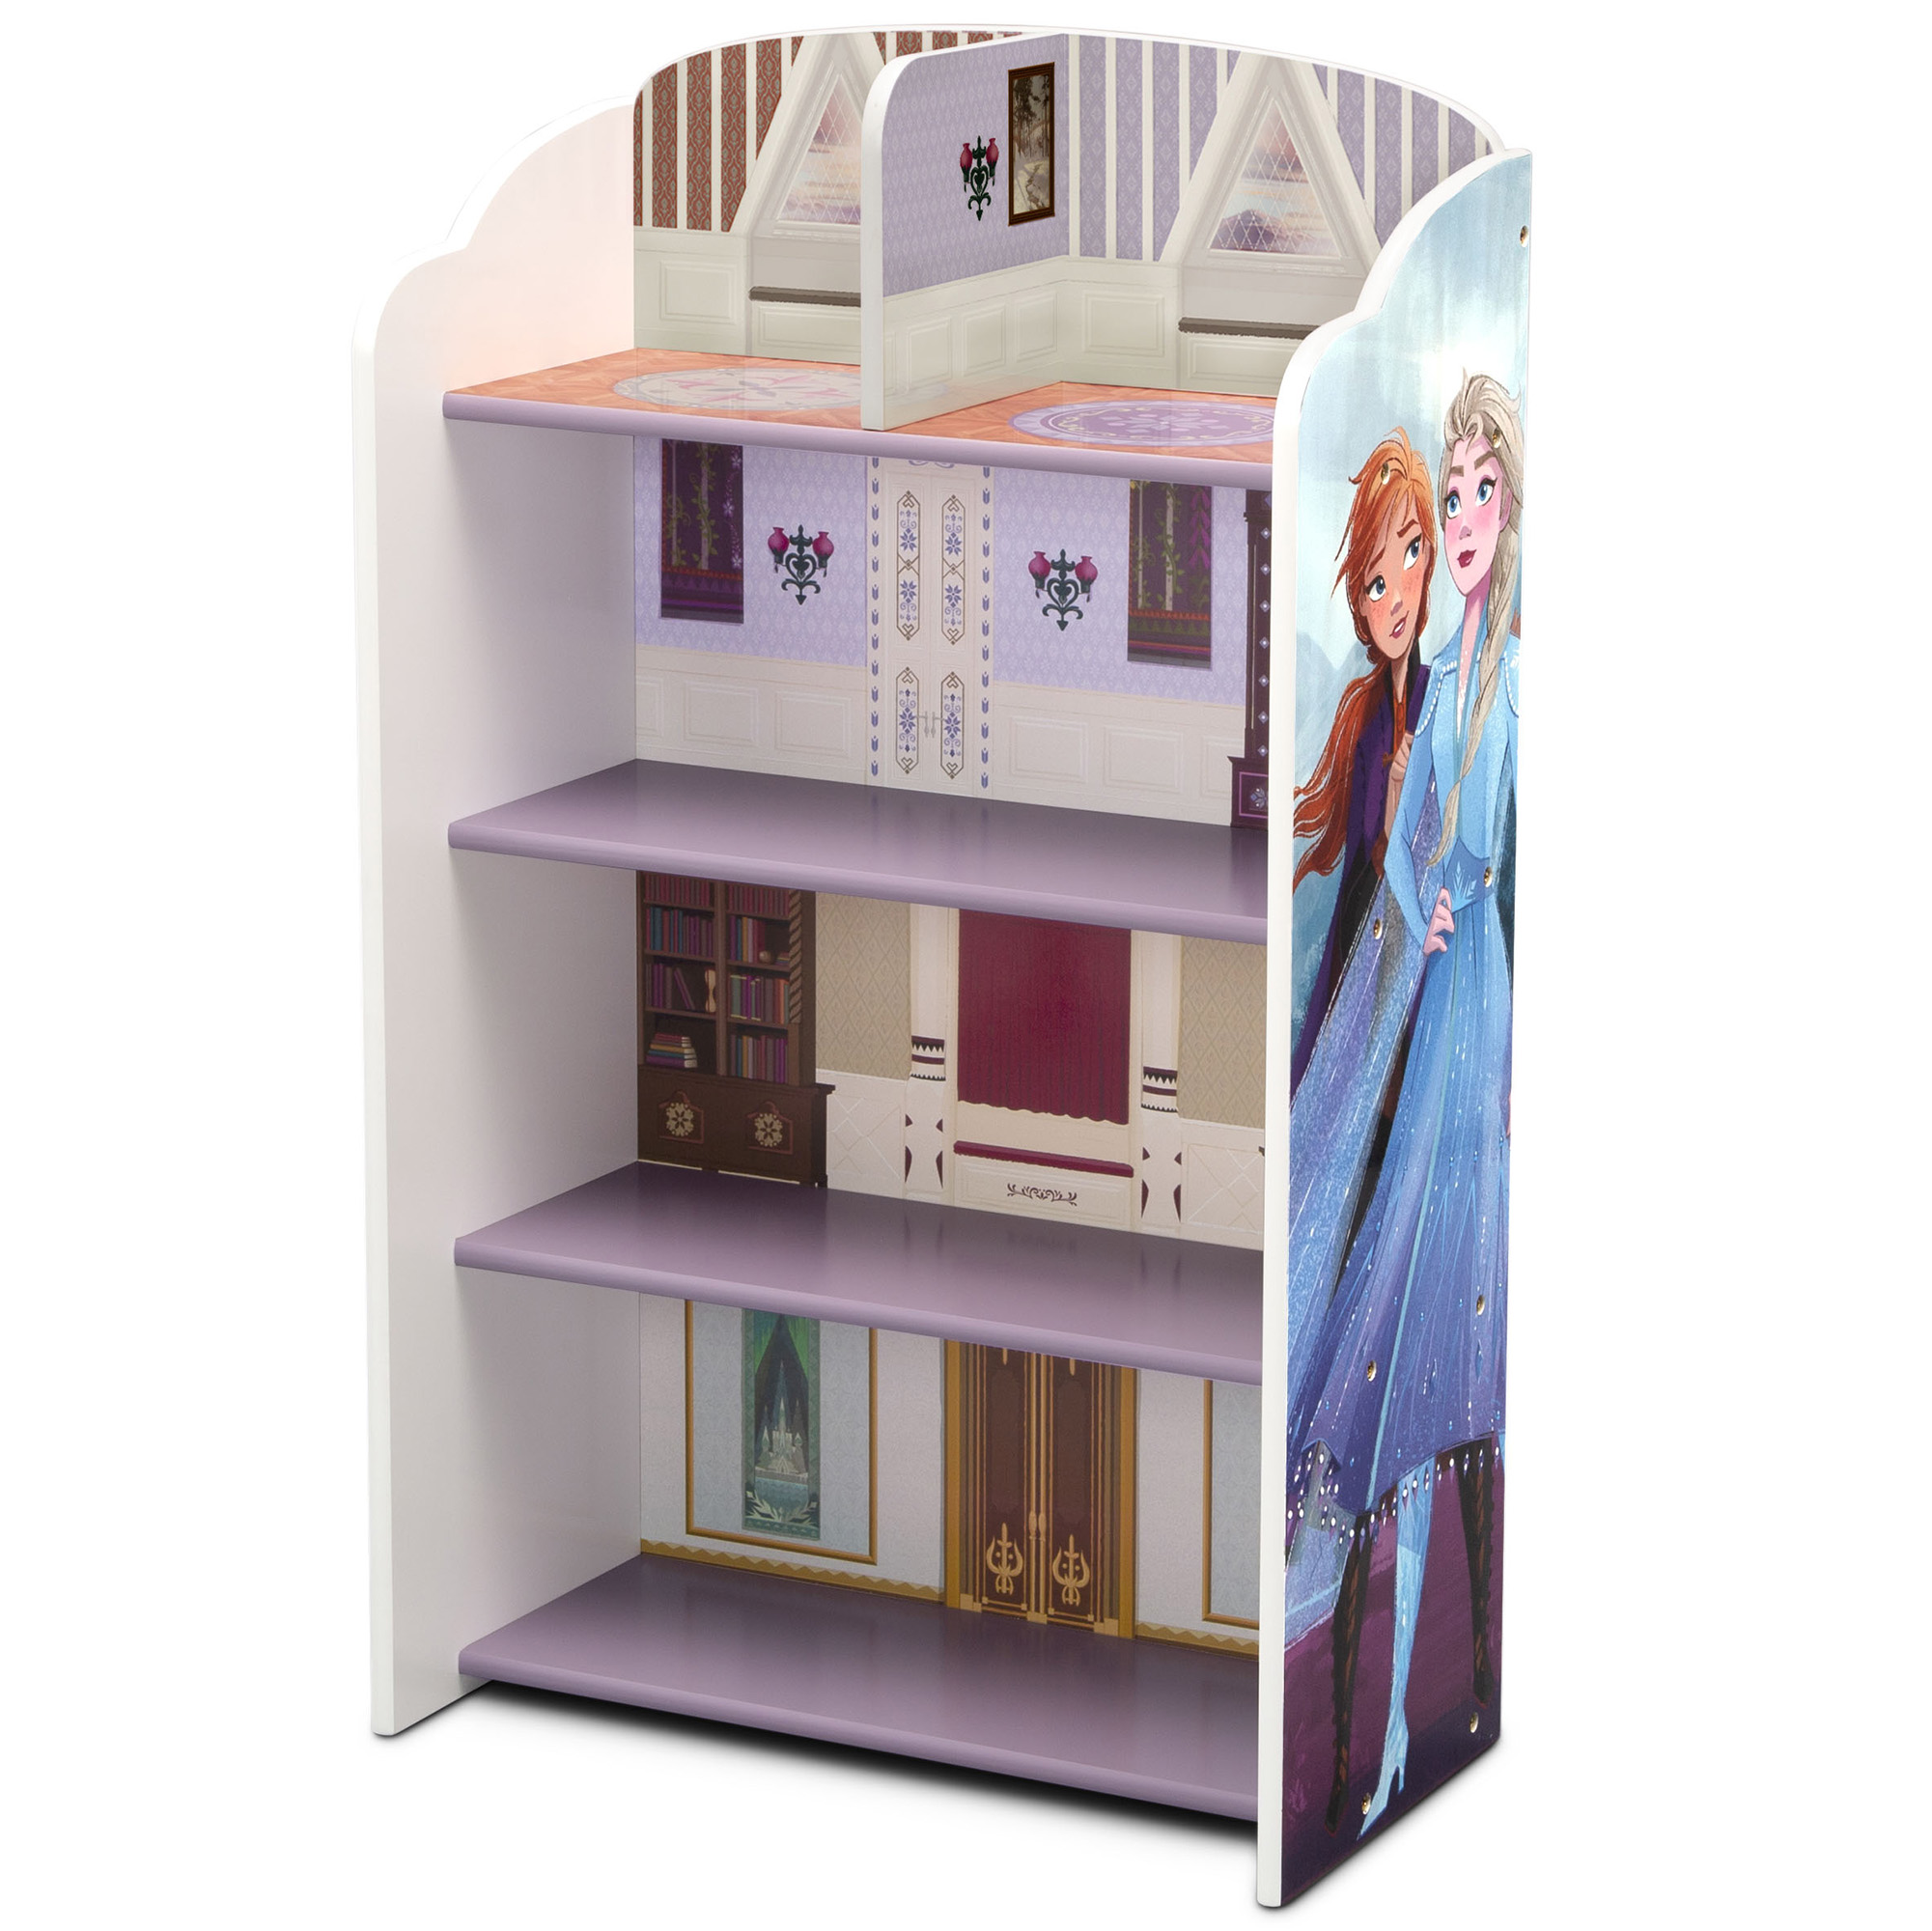 Disney Frozen II Wooden Playhouse 4-Shelf Bookcase for Kids by Delta Children, Greenguard Gold Certified - image 4 of 11